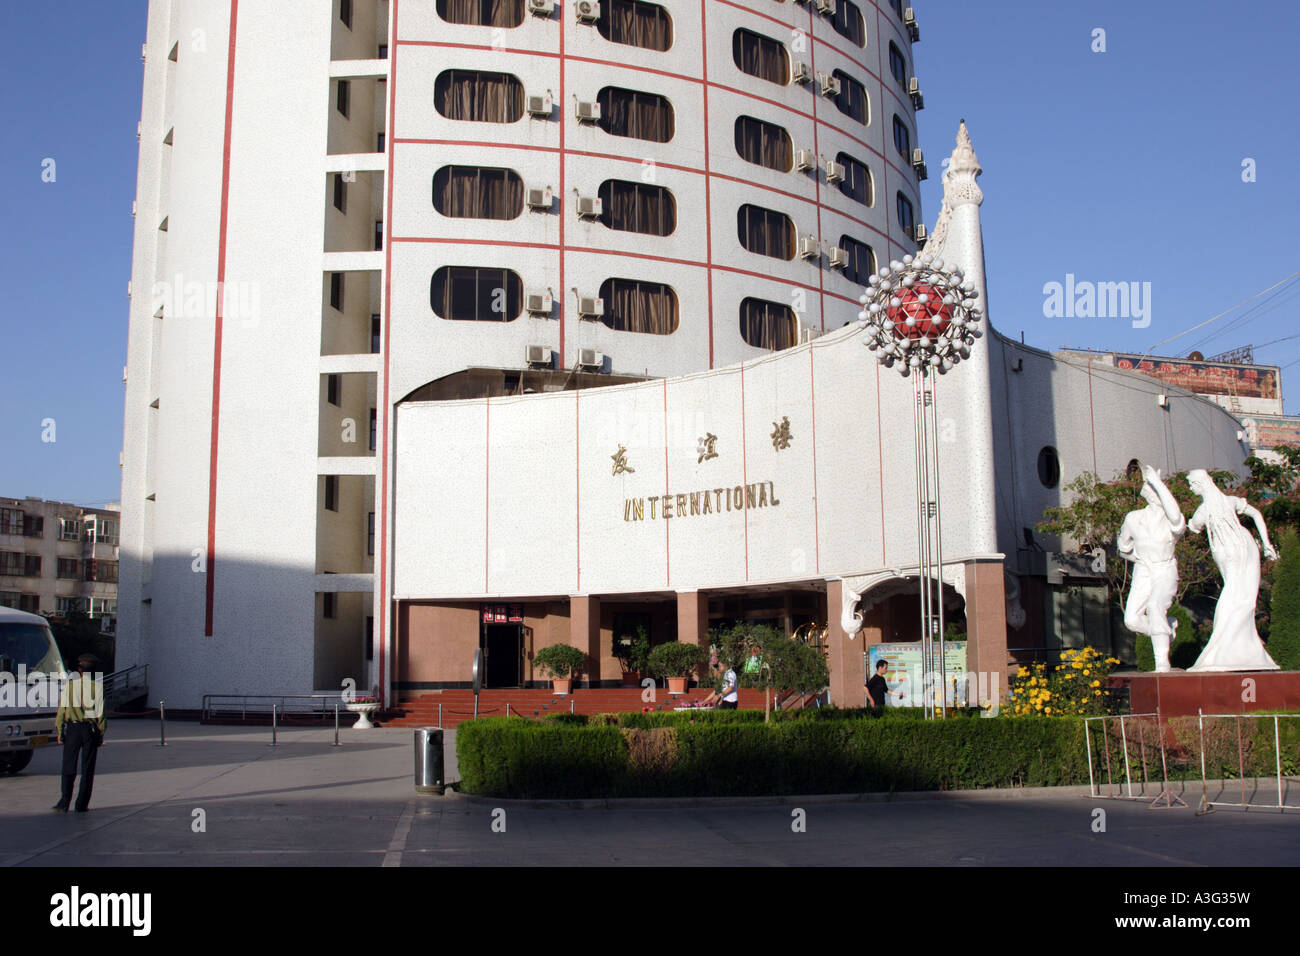 Qiniwak Hotel Kashgar Xinjiang China Stock Photo